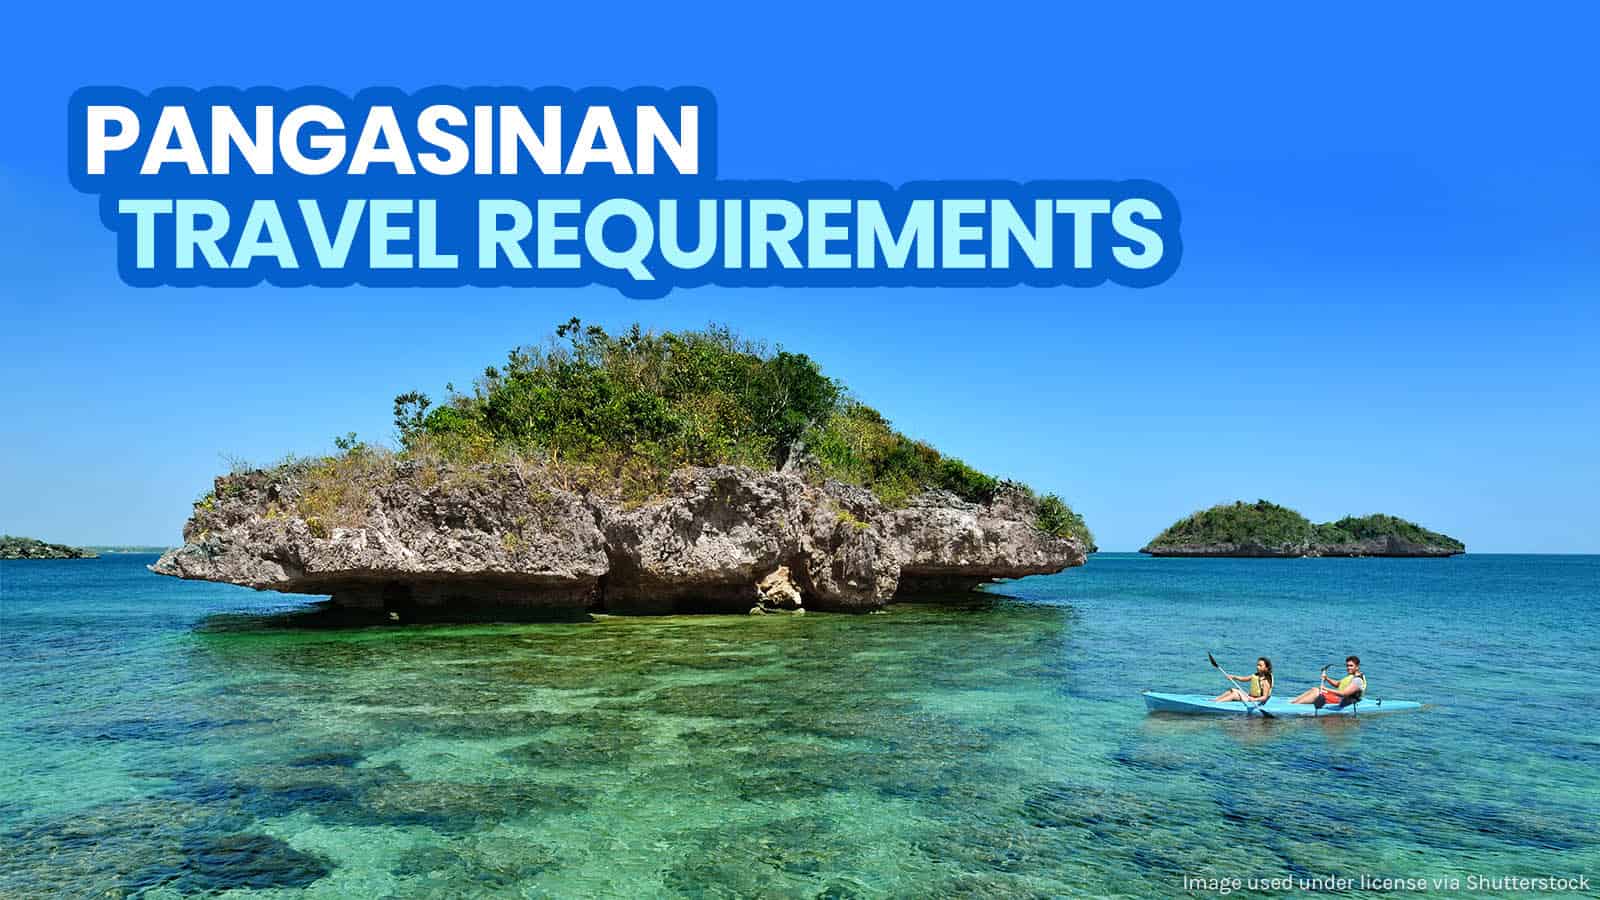 PANGASINAN旅游要求+开放景点列表